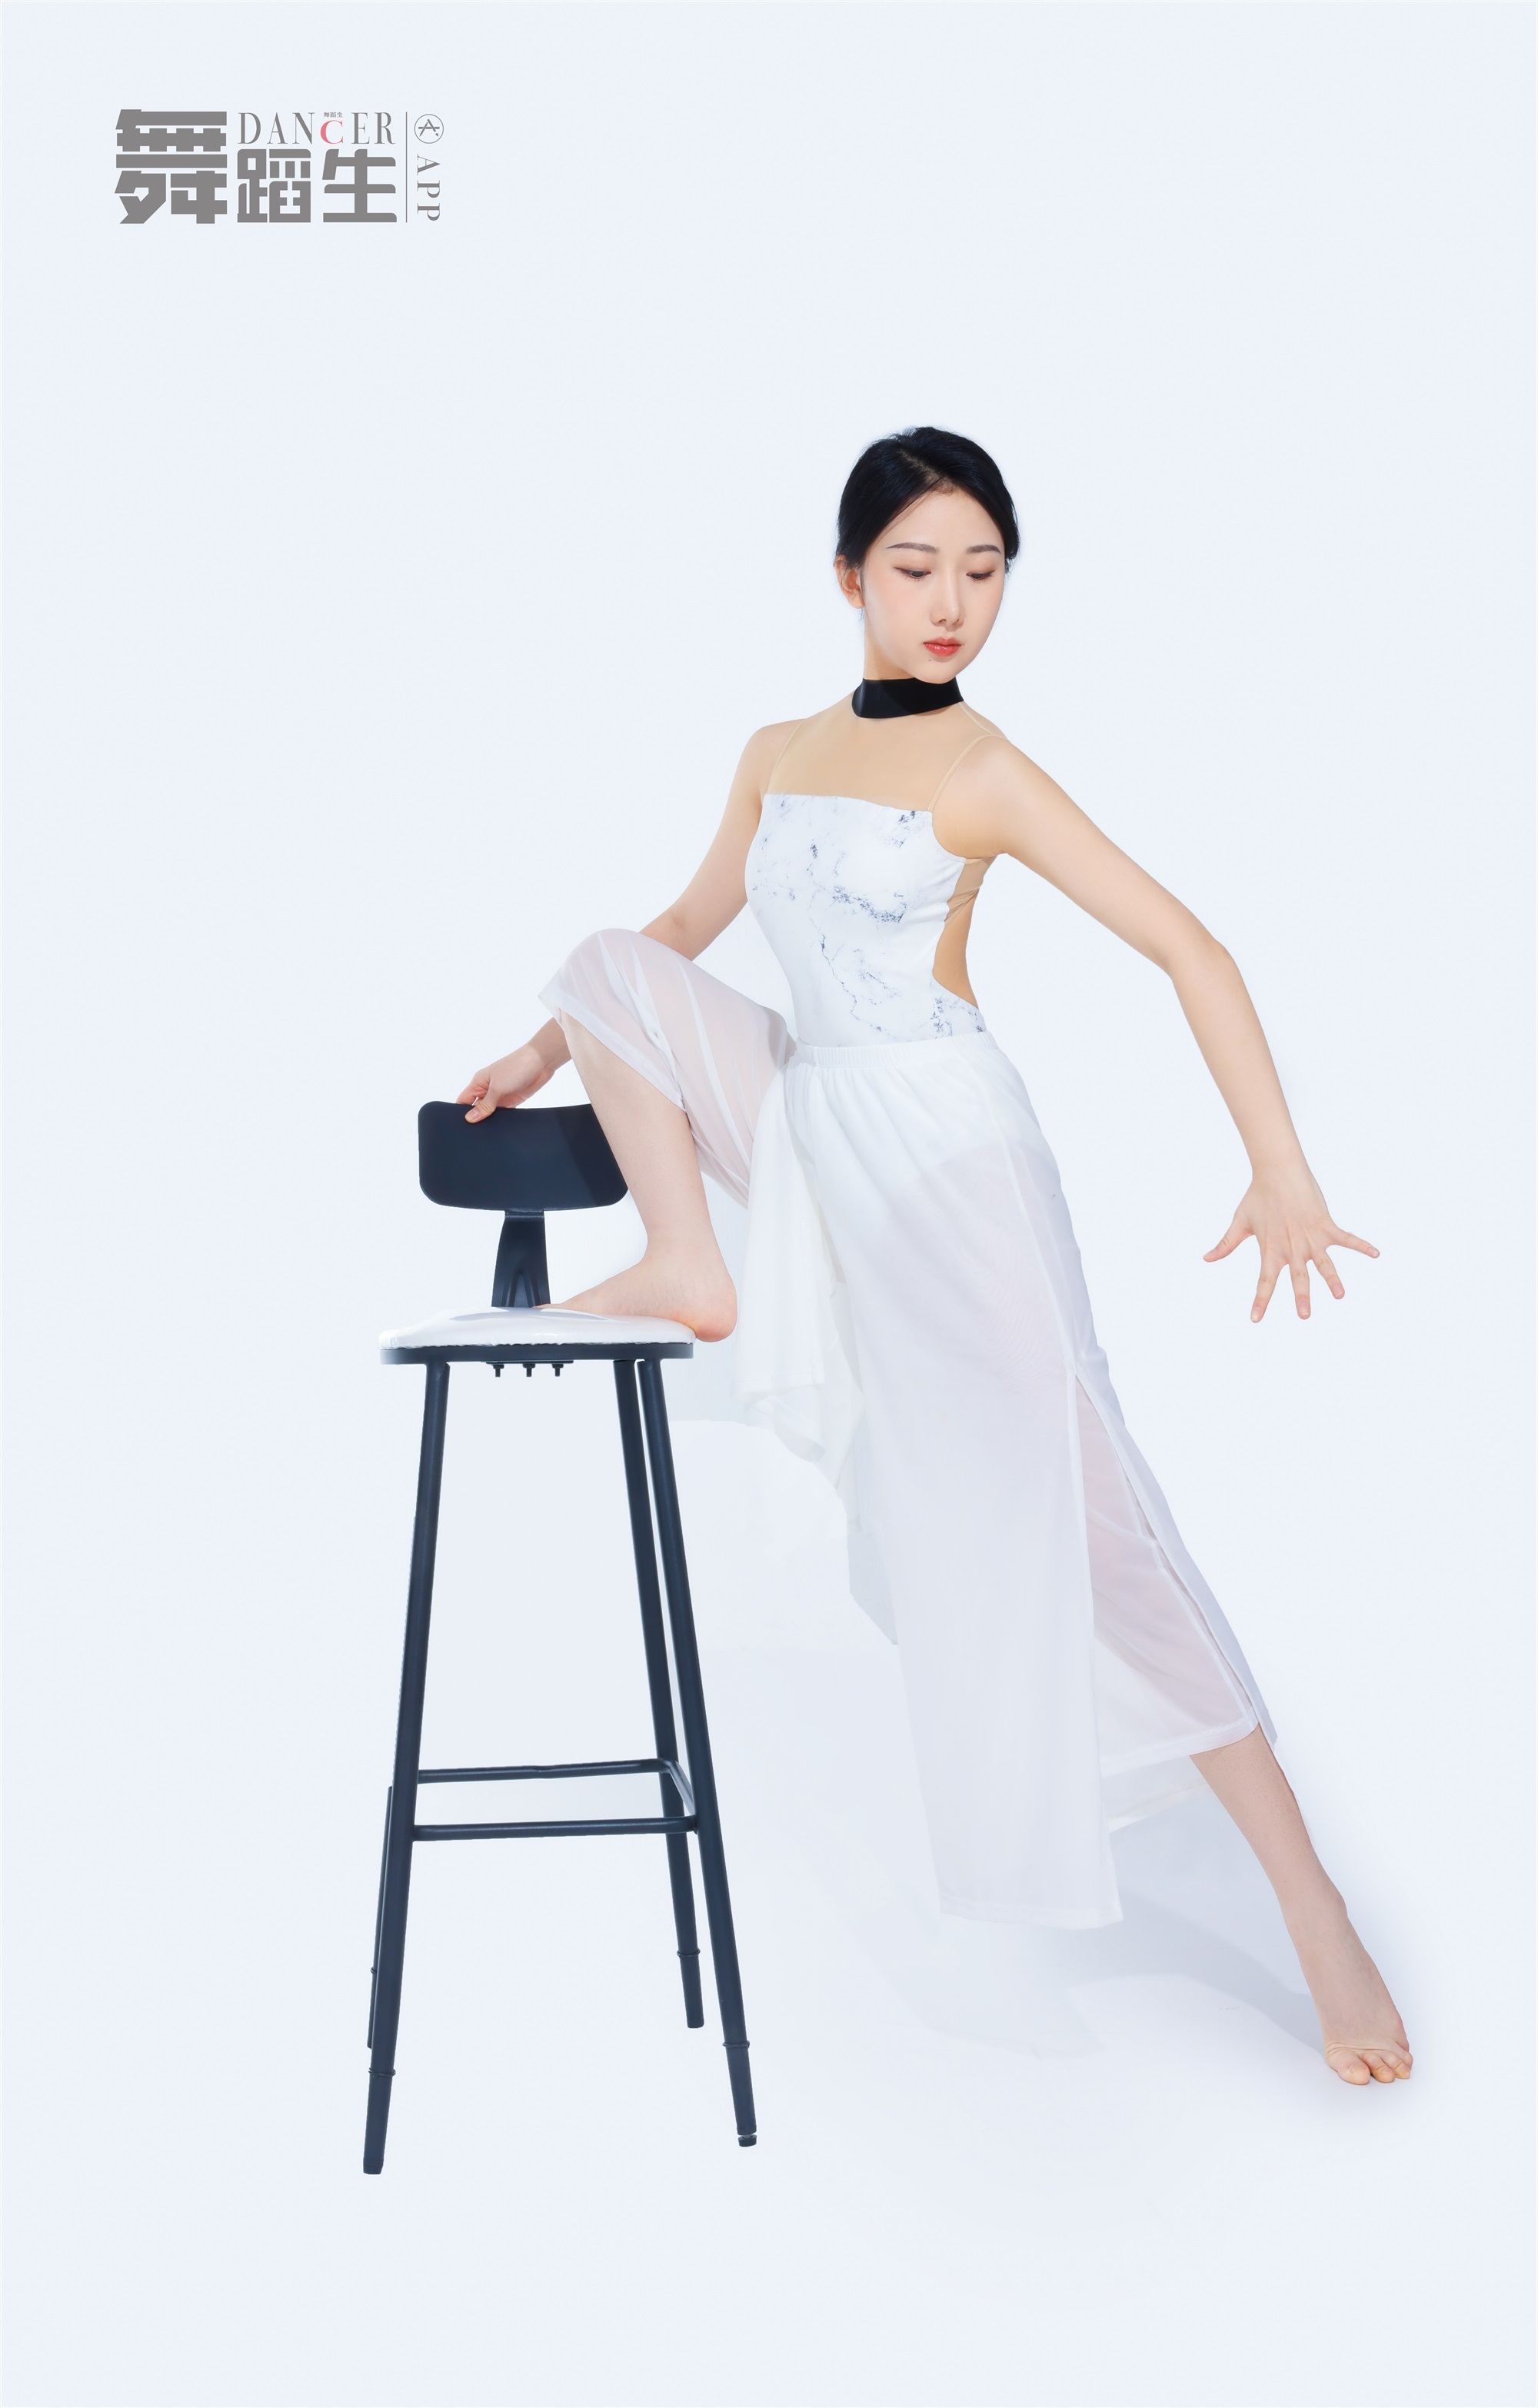 GALLI Carrie Dance Diary 083 - Dance like a butterfly Xue Hui